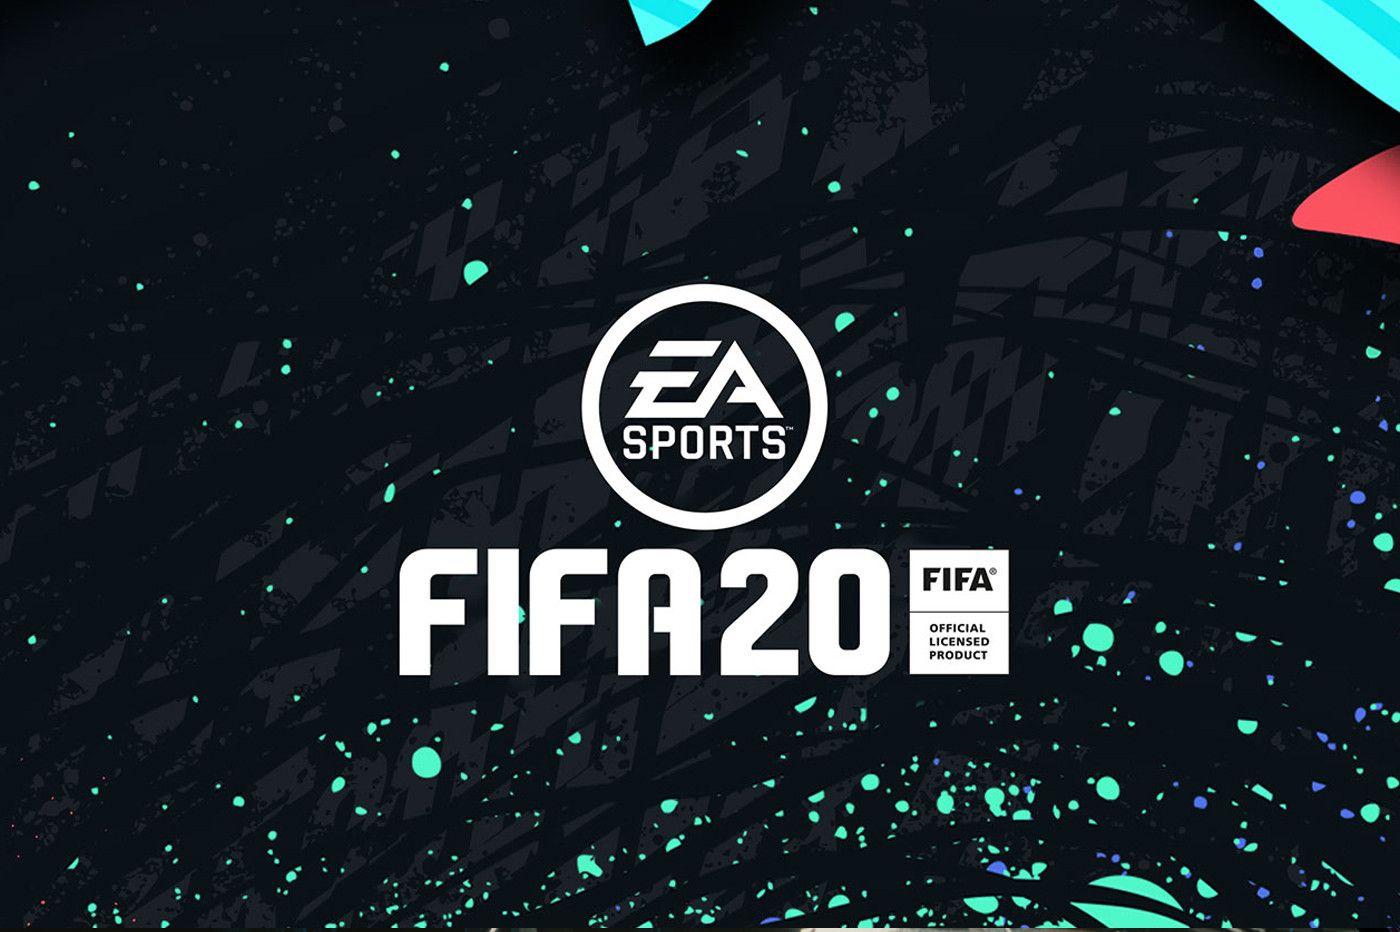 Soluce FIFA 20, guide, astuces - jeuxvideo.com